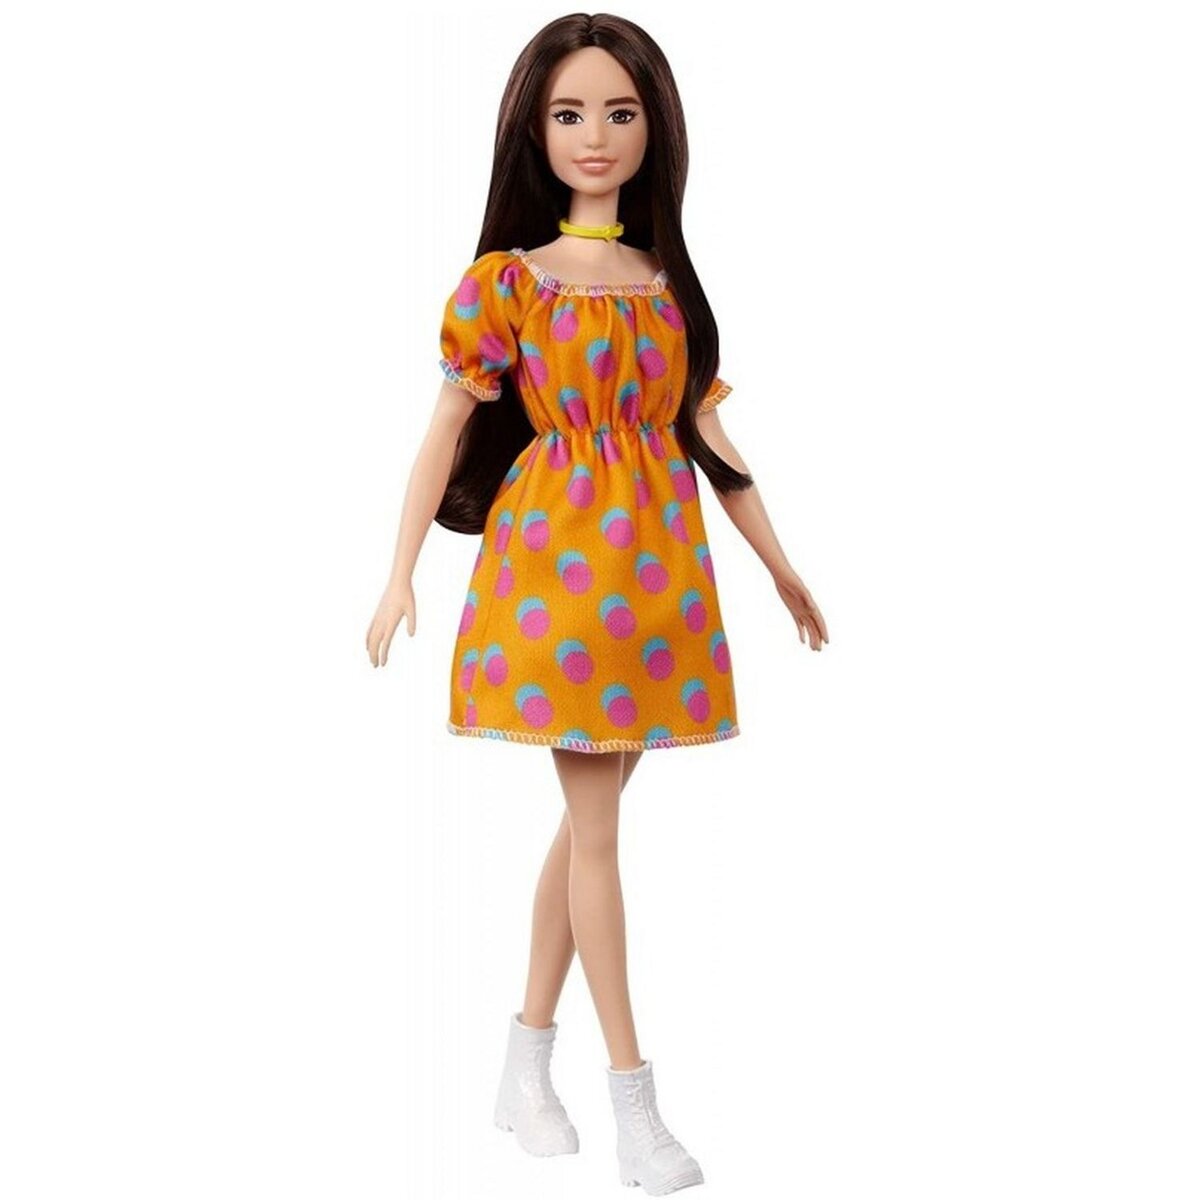 BARBIE Barbie Fashionista Doll